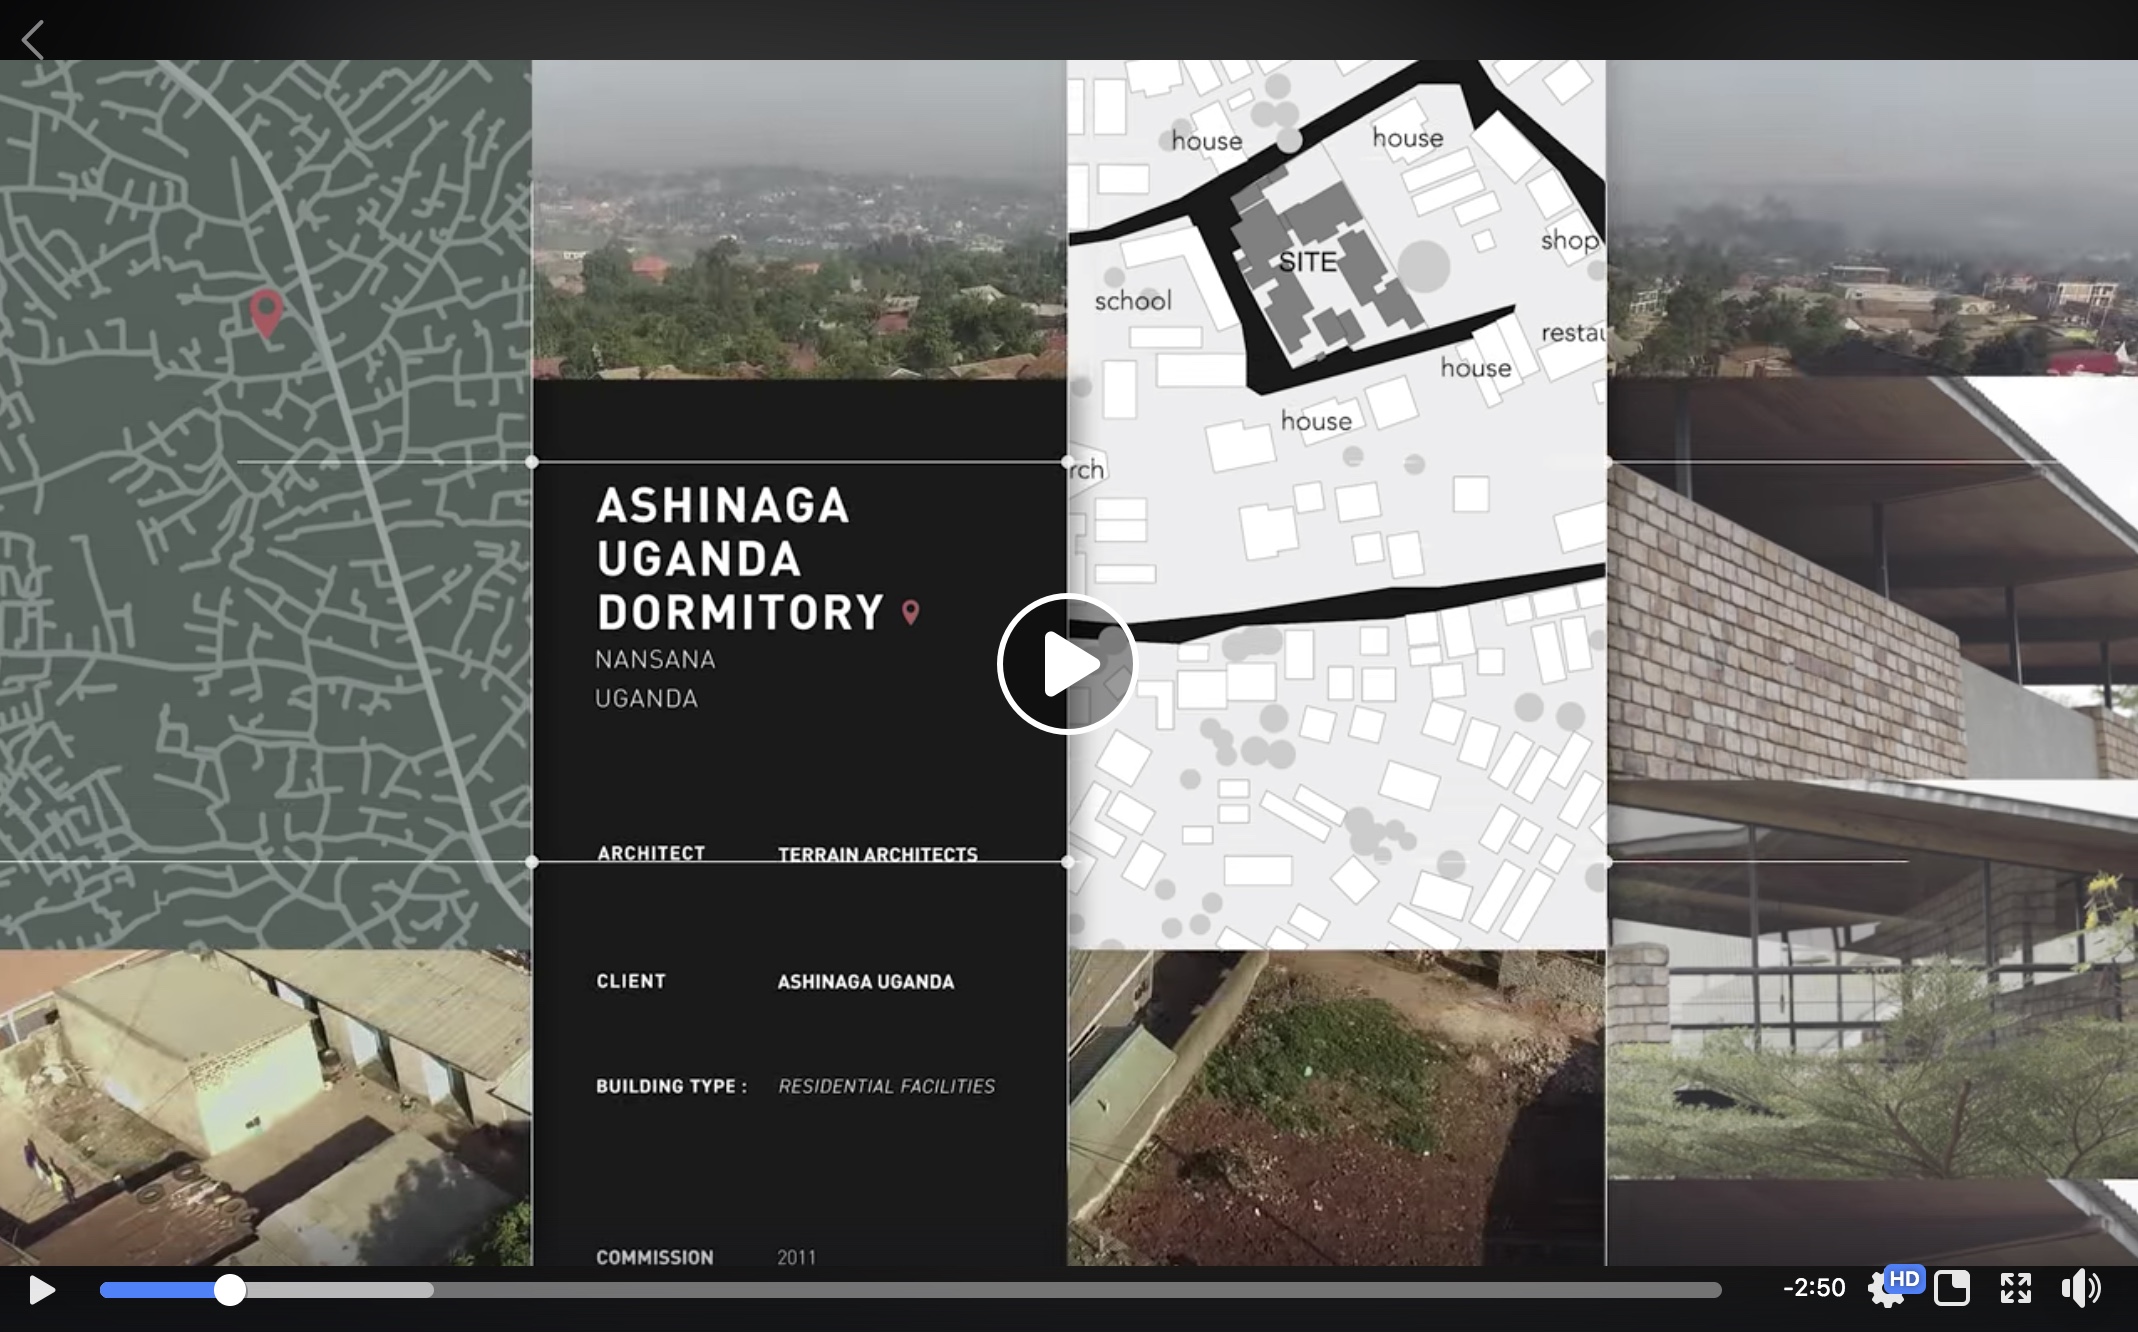 Video Introduction to Ashinaga Uganda Dormitory